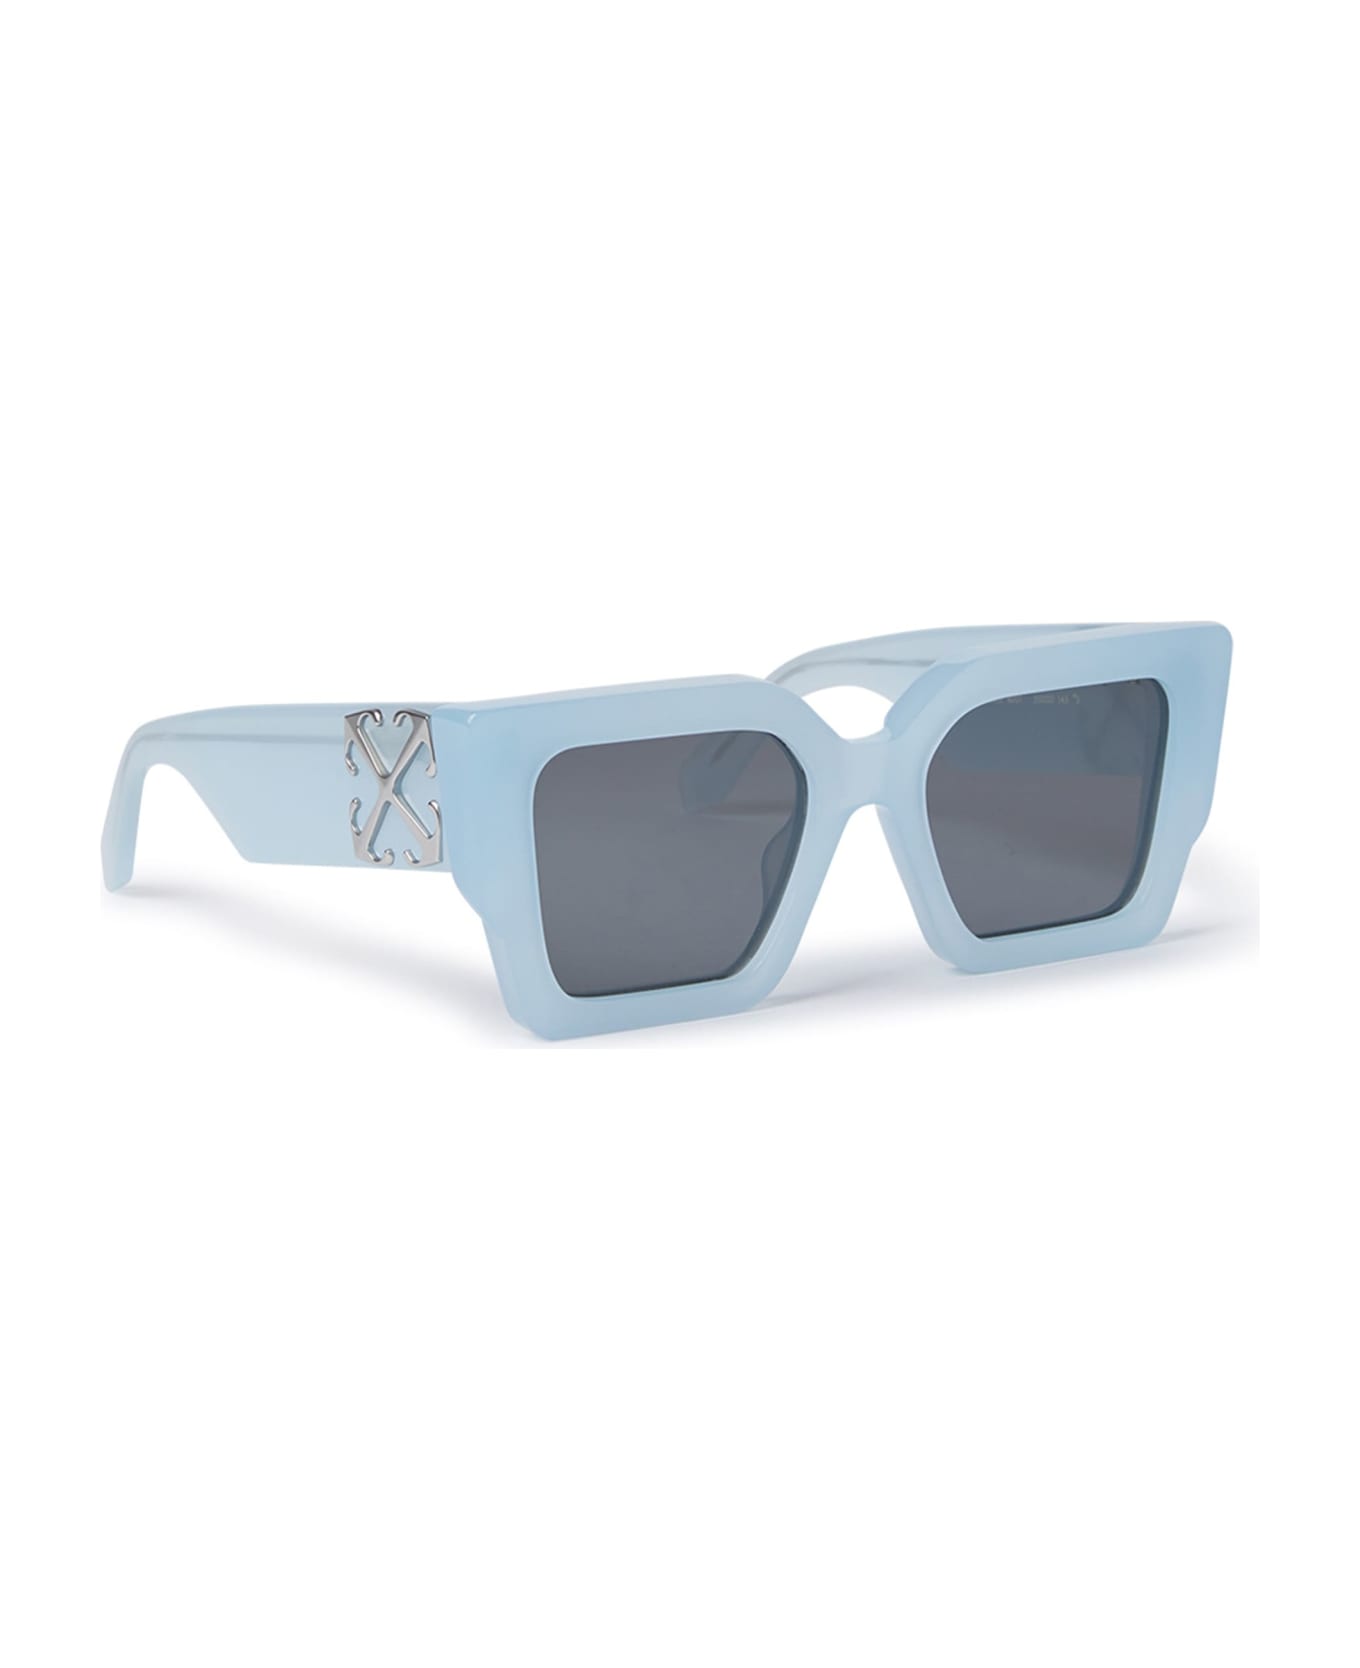 Off-White Catalina Sunglasses - blue